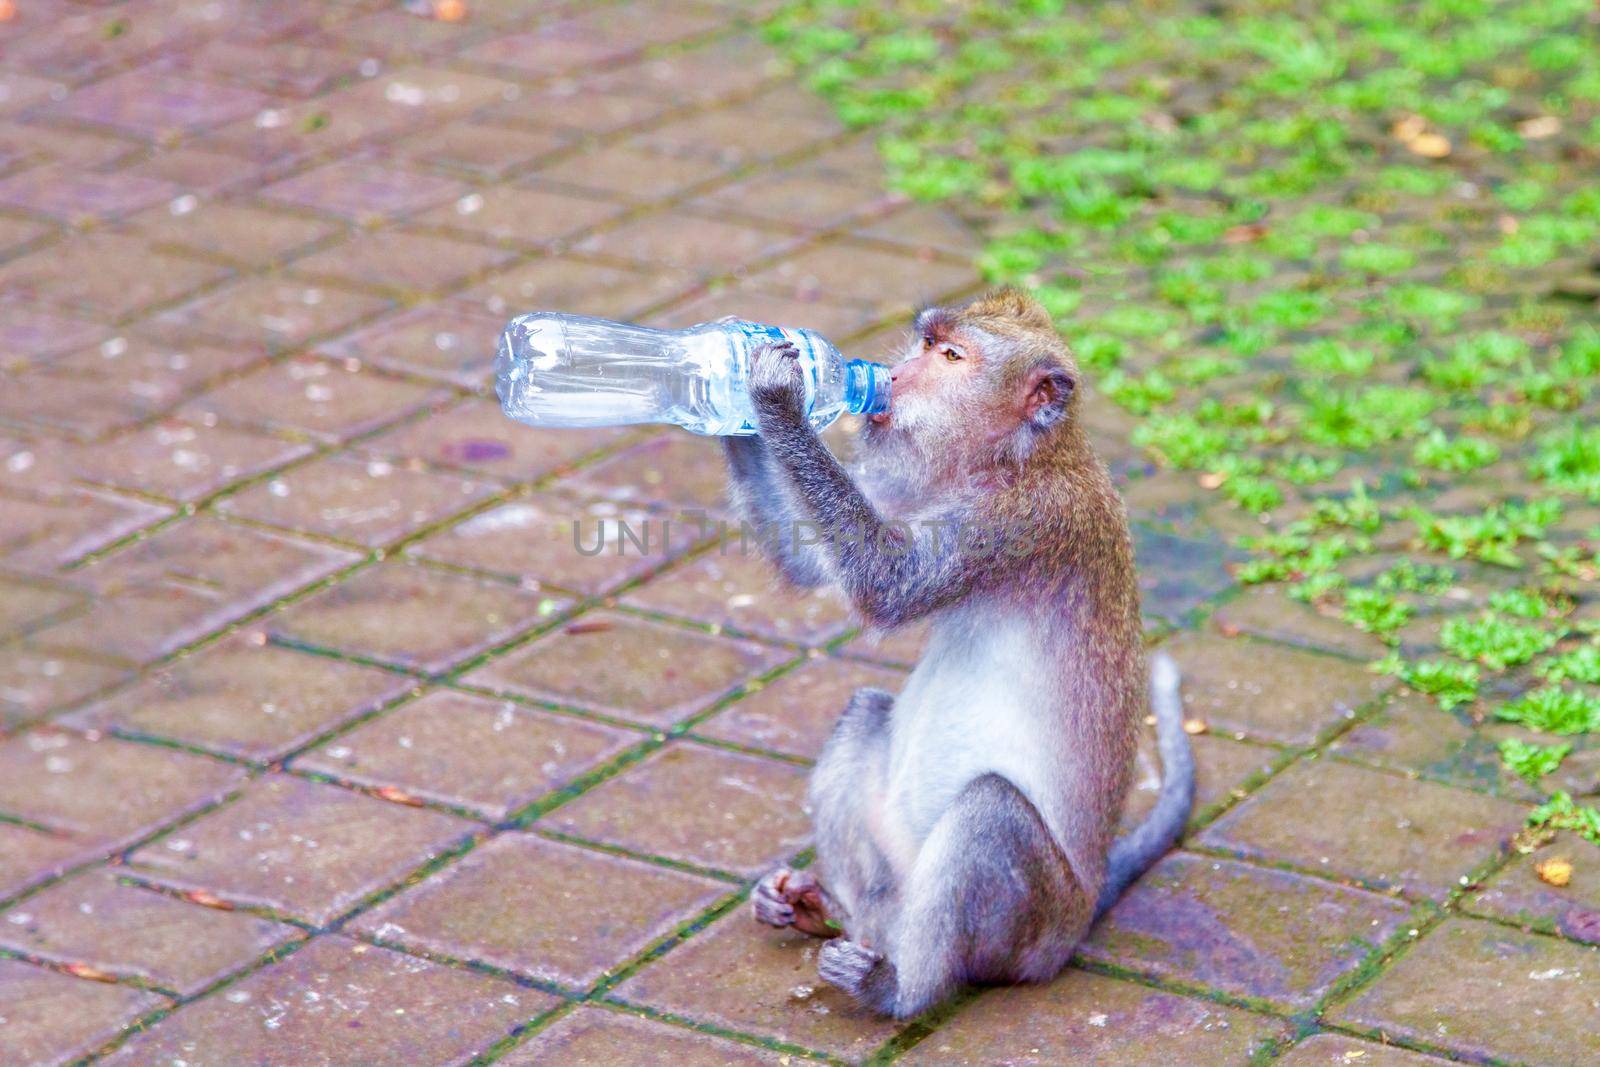 The monkey drinks water from a plastic bottle. by kolesnikov_studio